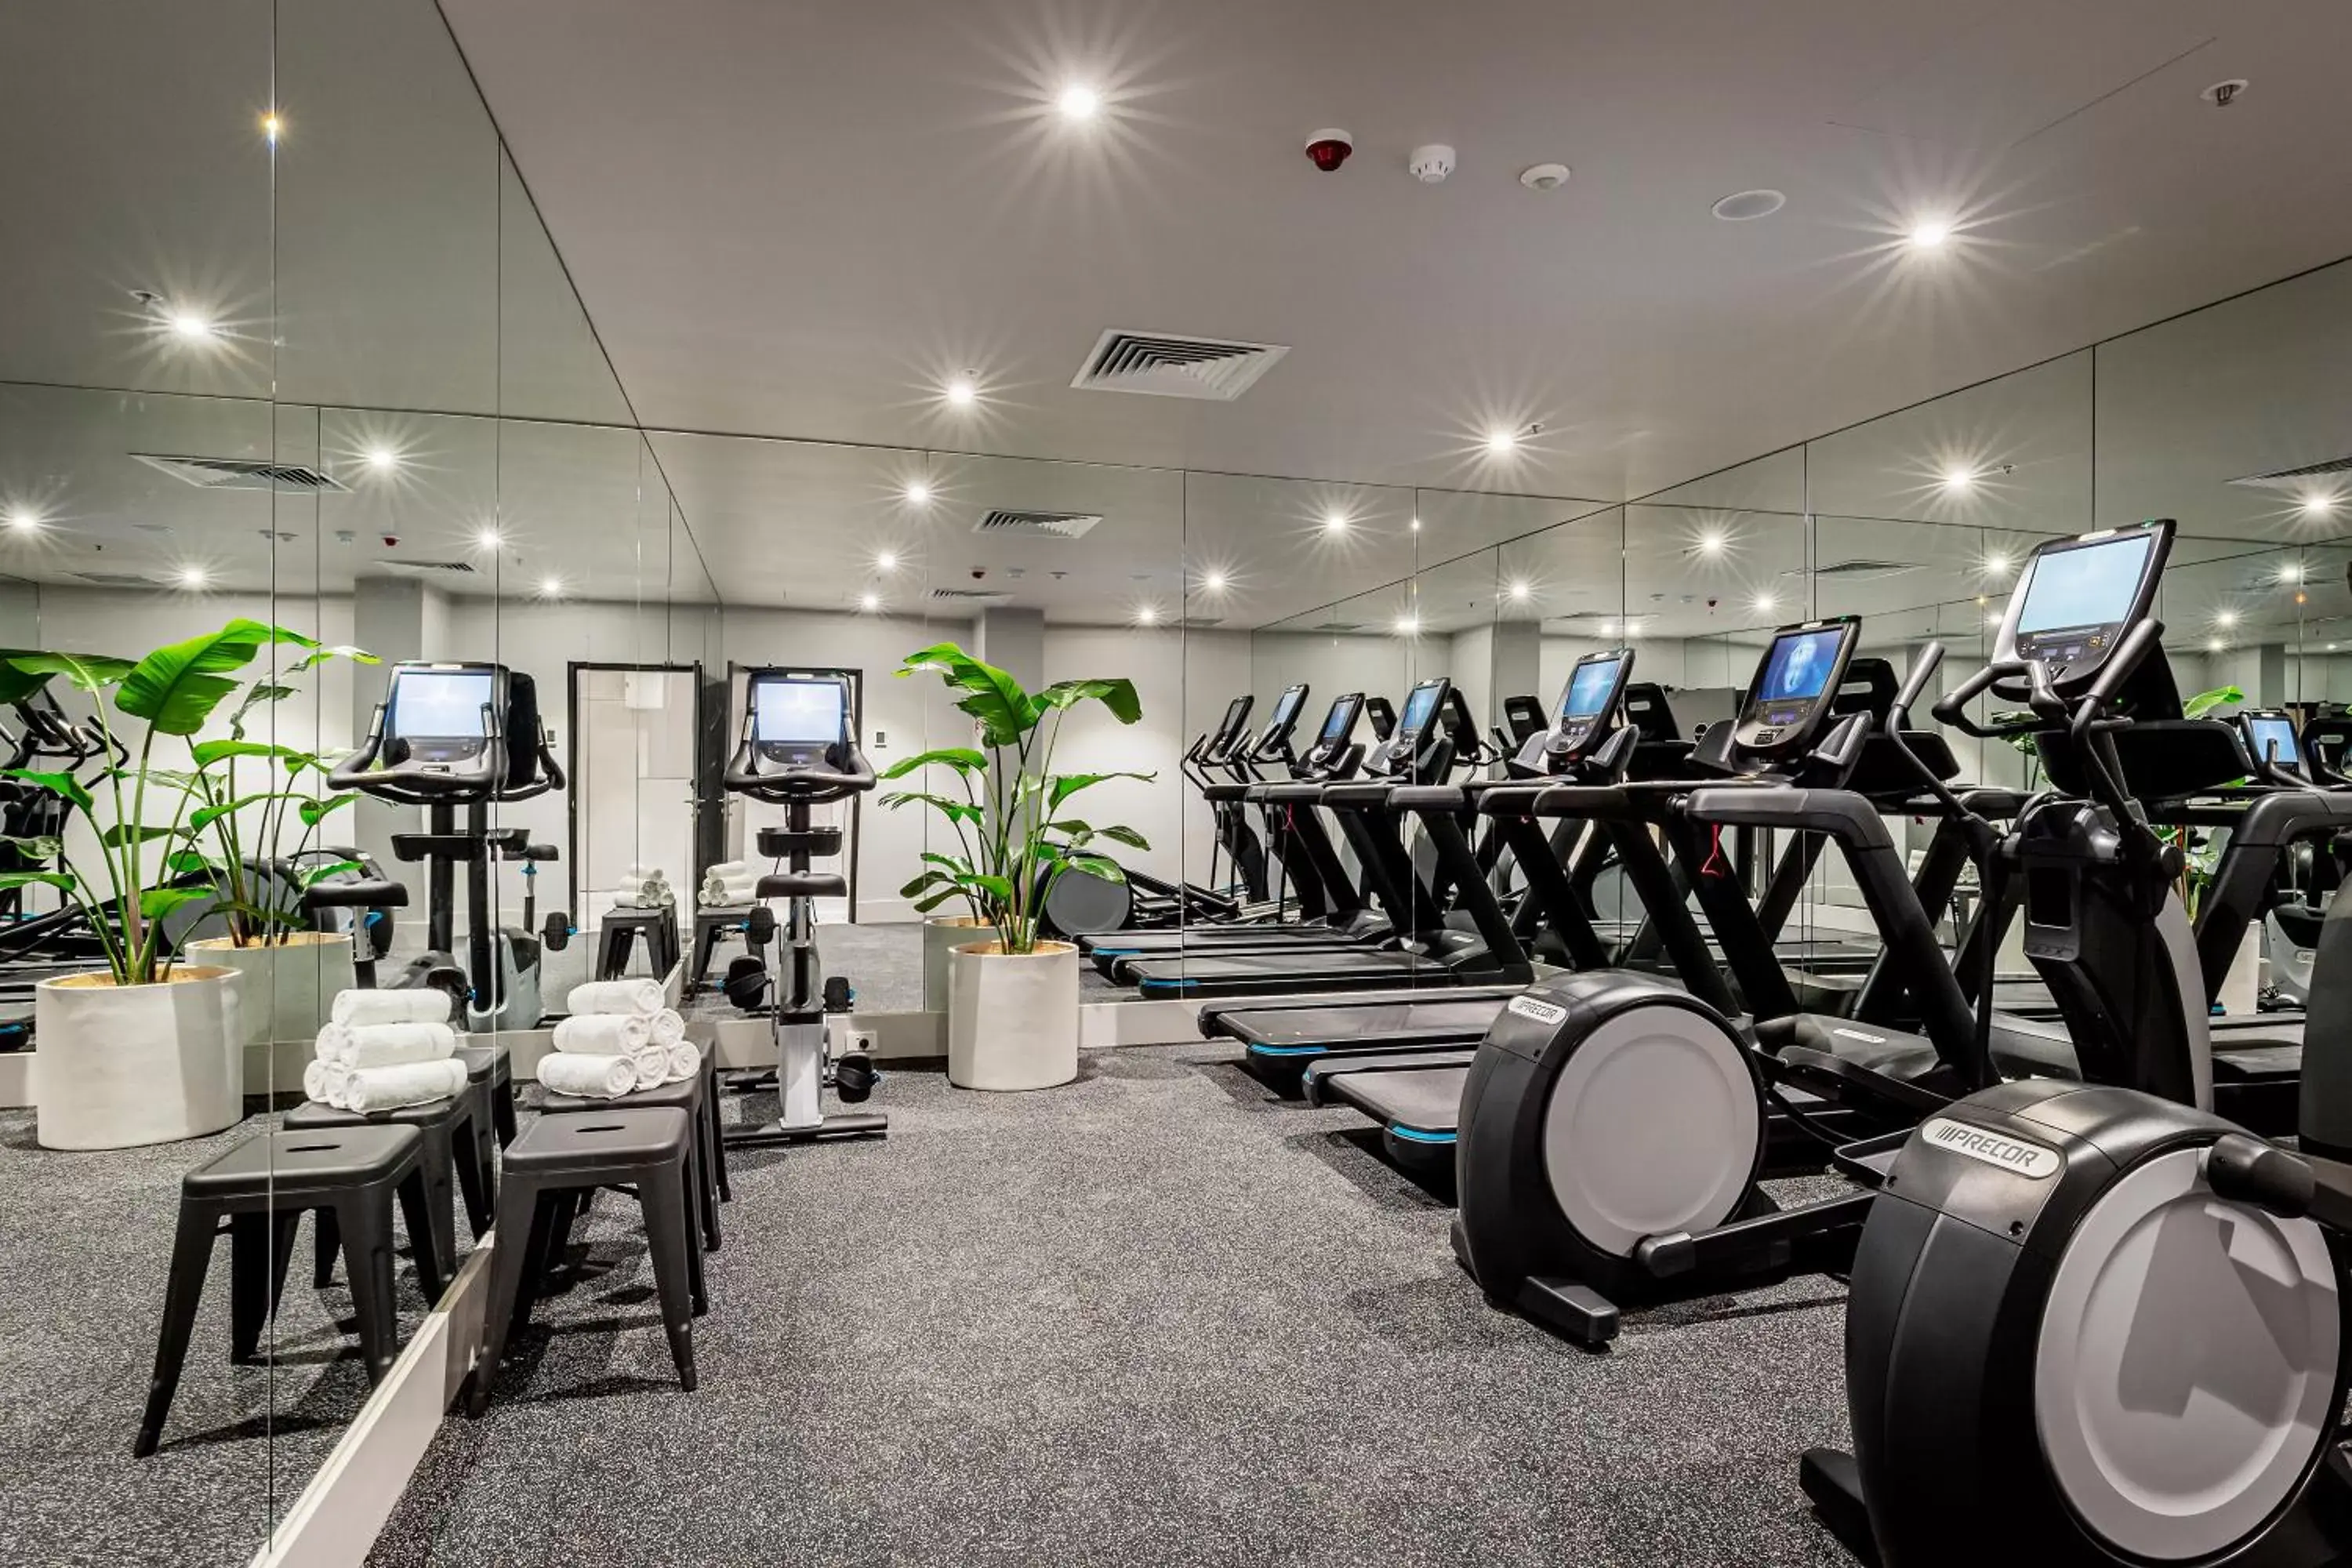 Fitness centre/facilities, Fitness Center/Facilities in Brady Hotels Jones Lane